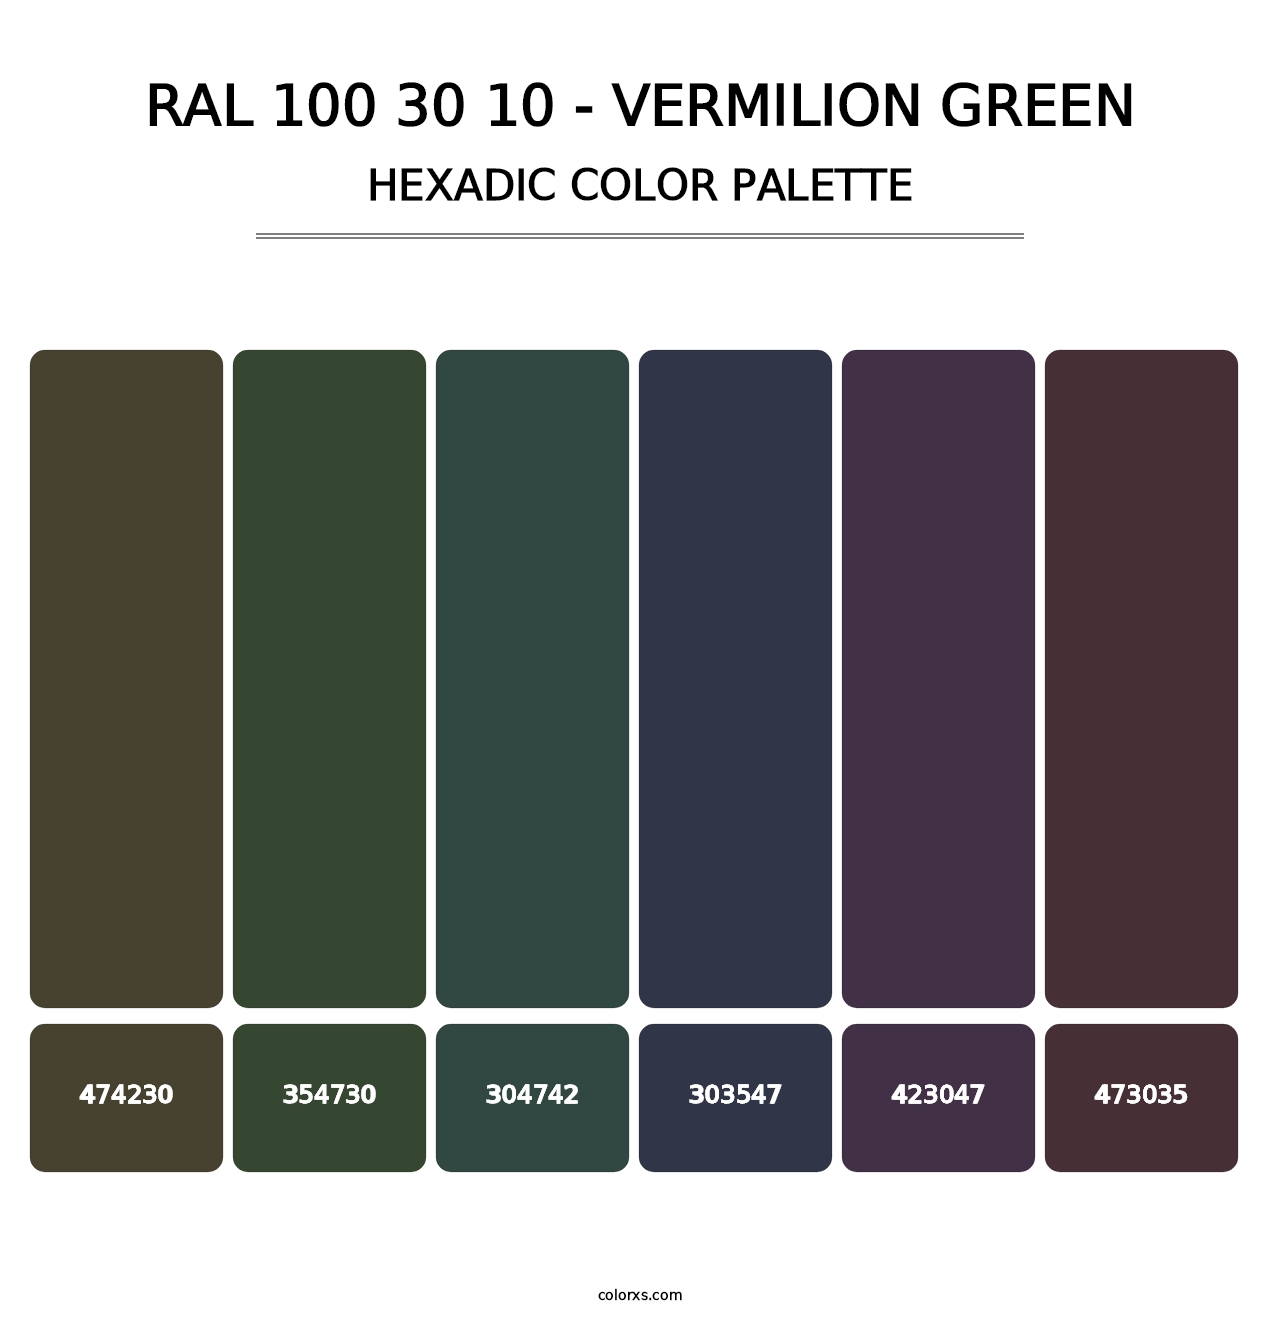 RAL 100 30 10 - Vermilion Green - Hexadic Color Palette